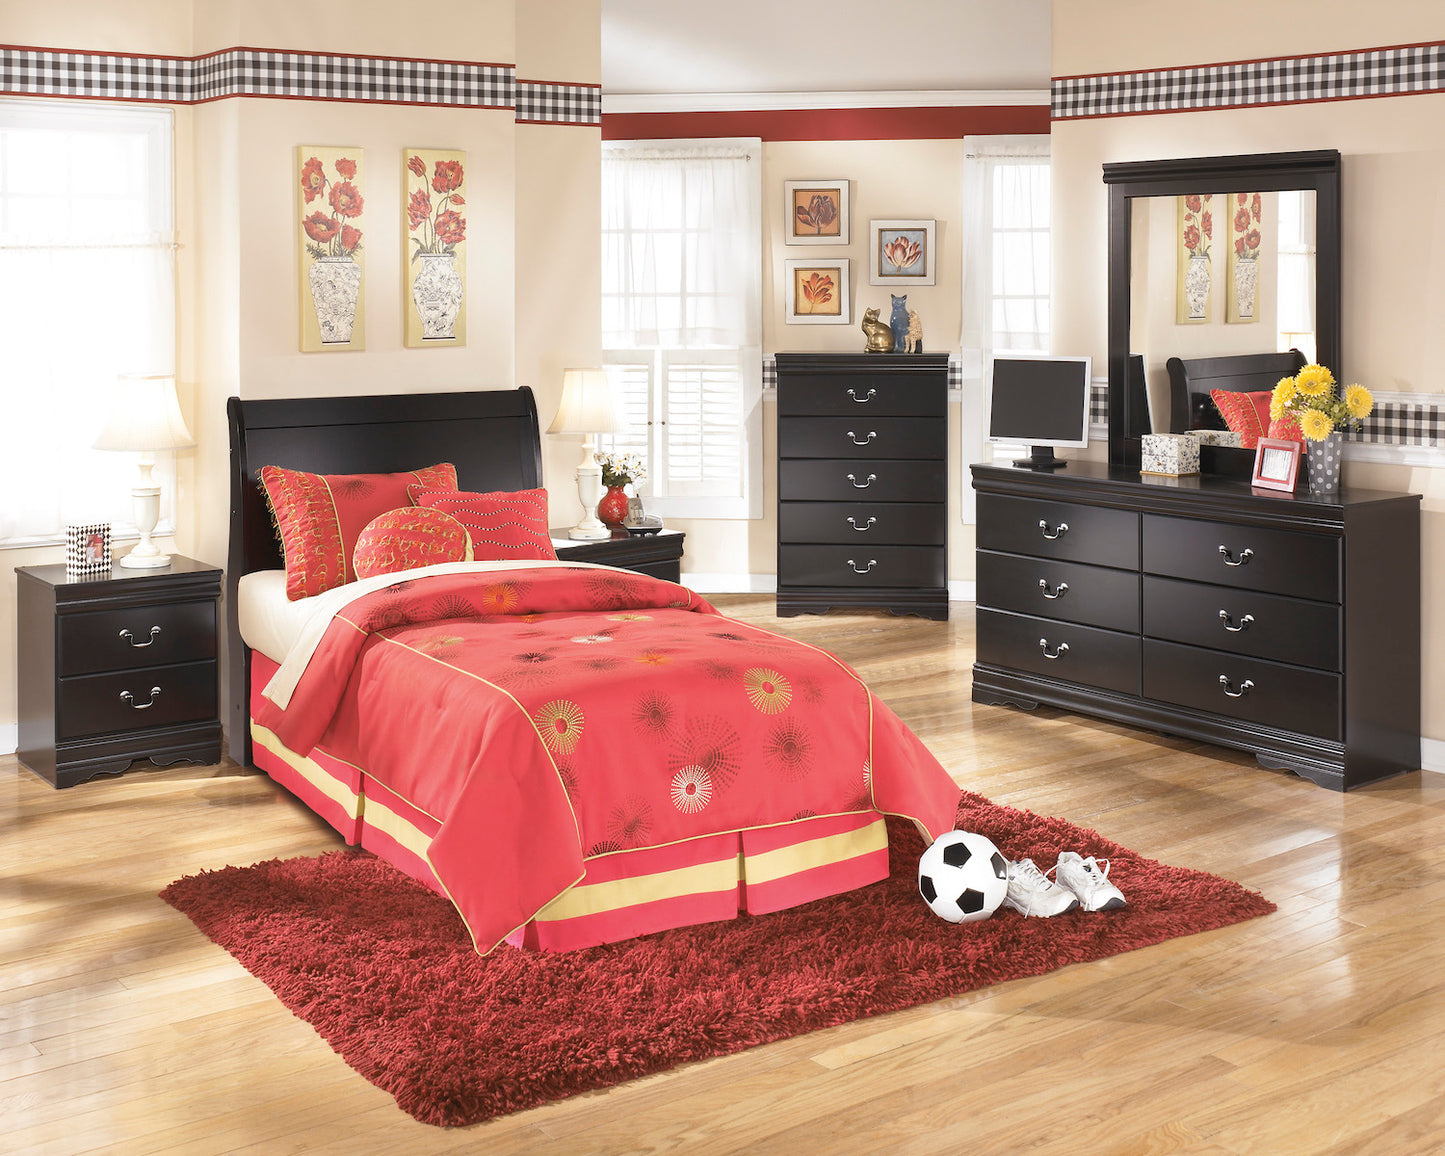 Ashley Huey Vineyard 5PC twin sleigh Headboard Bedroom Set with two Nightstands in Black